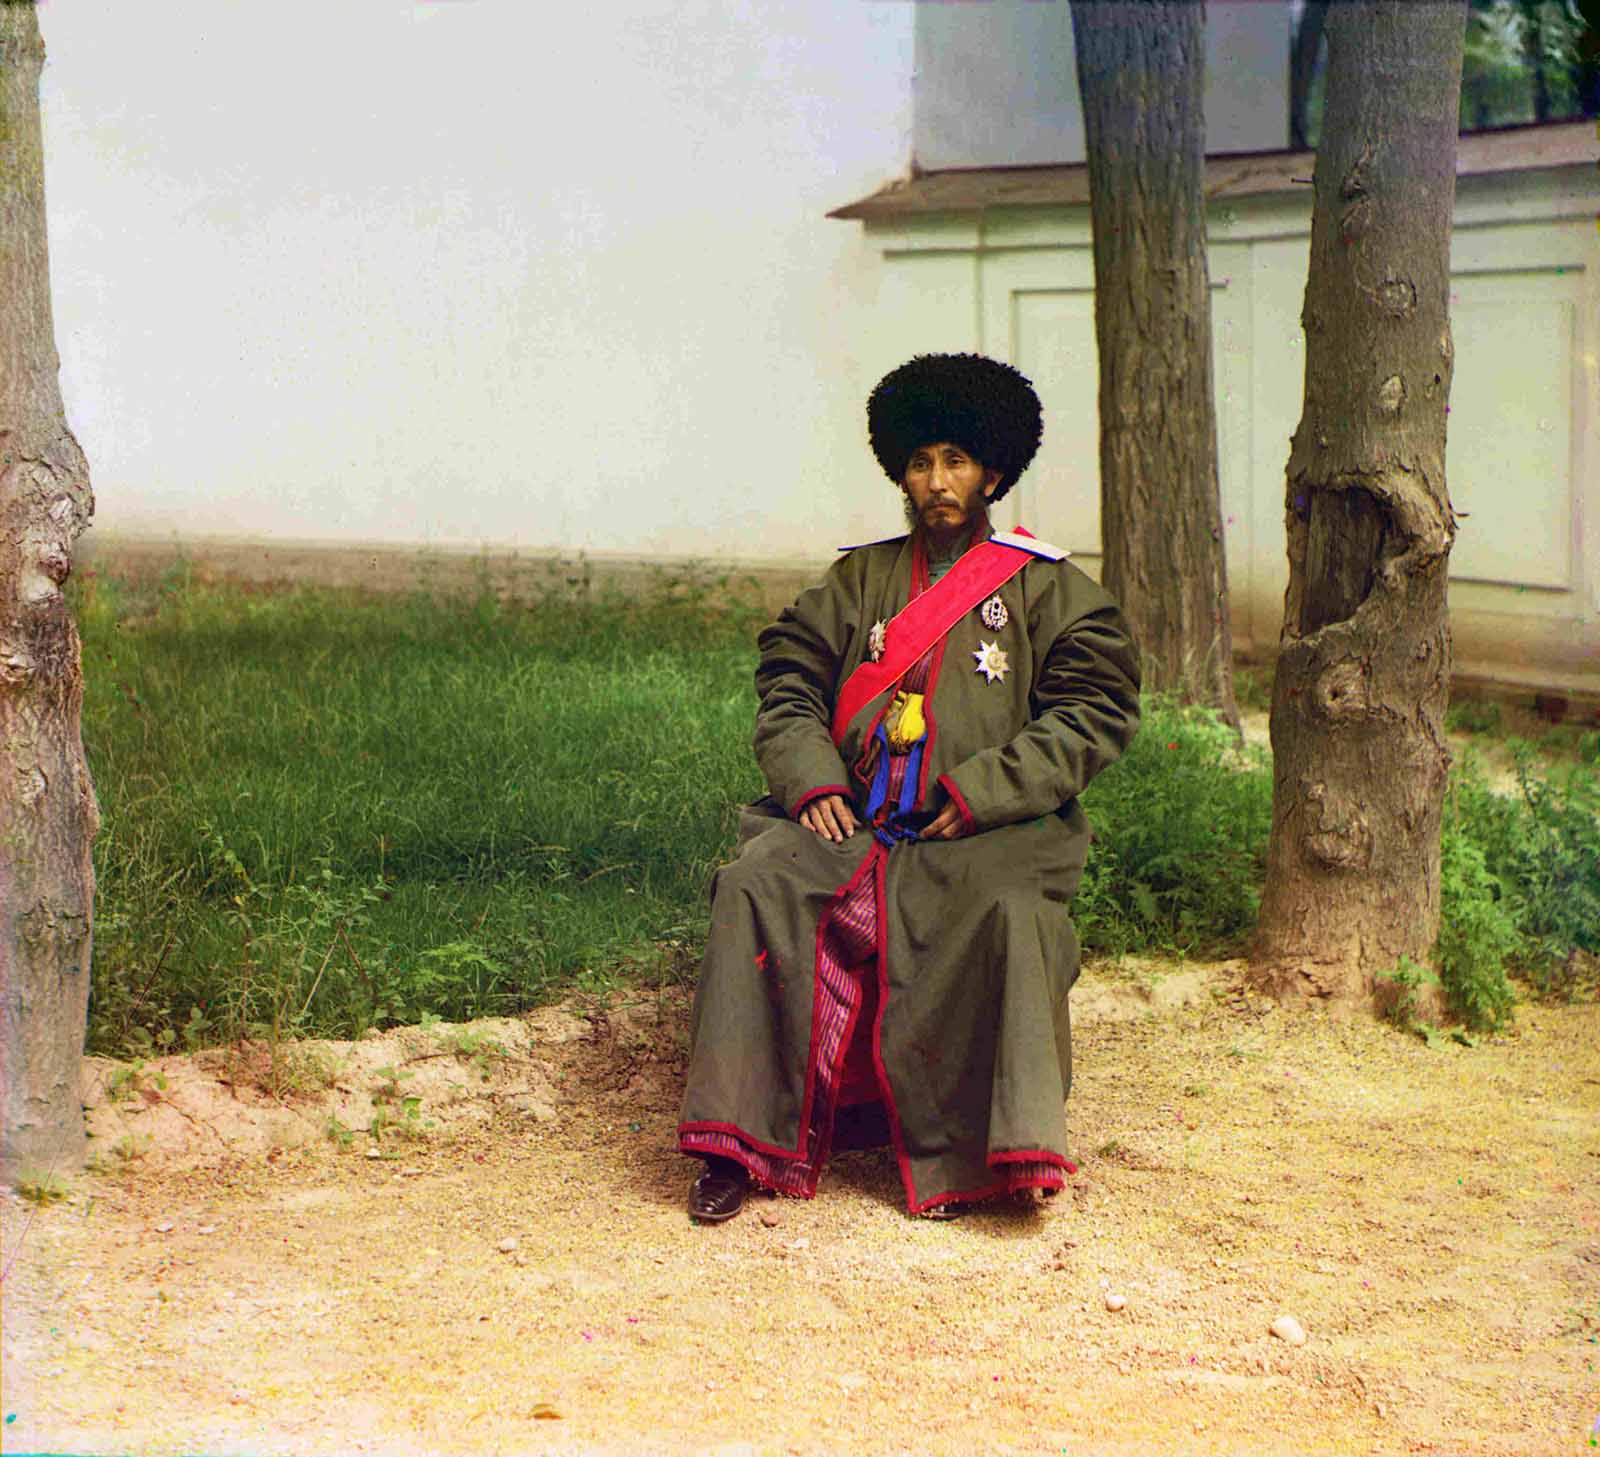 Isfandiyar Jurji Bahadur, Khan of the Russian protectorate of Khorezm (Khiva, now a part of modern Uzbekistan), full-length portrait, seated outdoors, 1910.